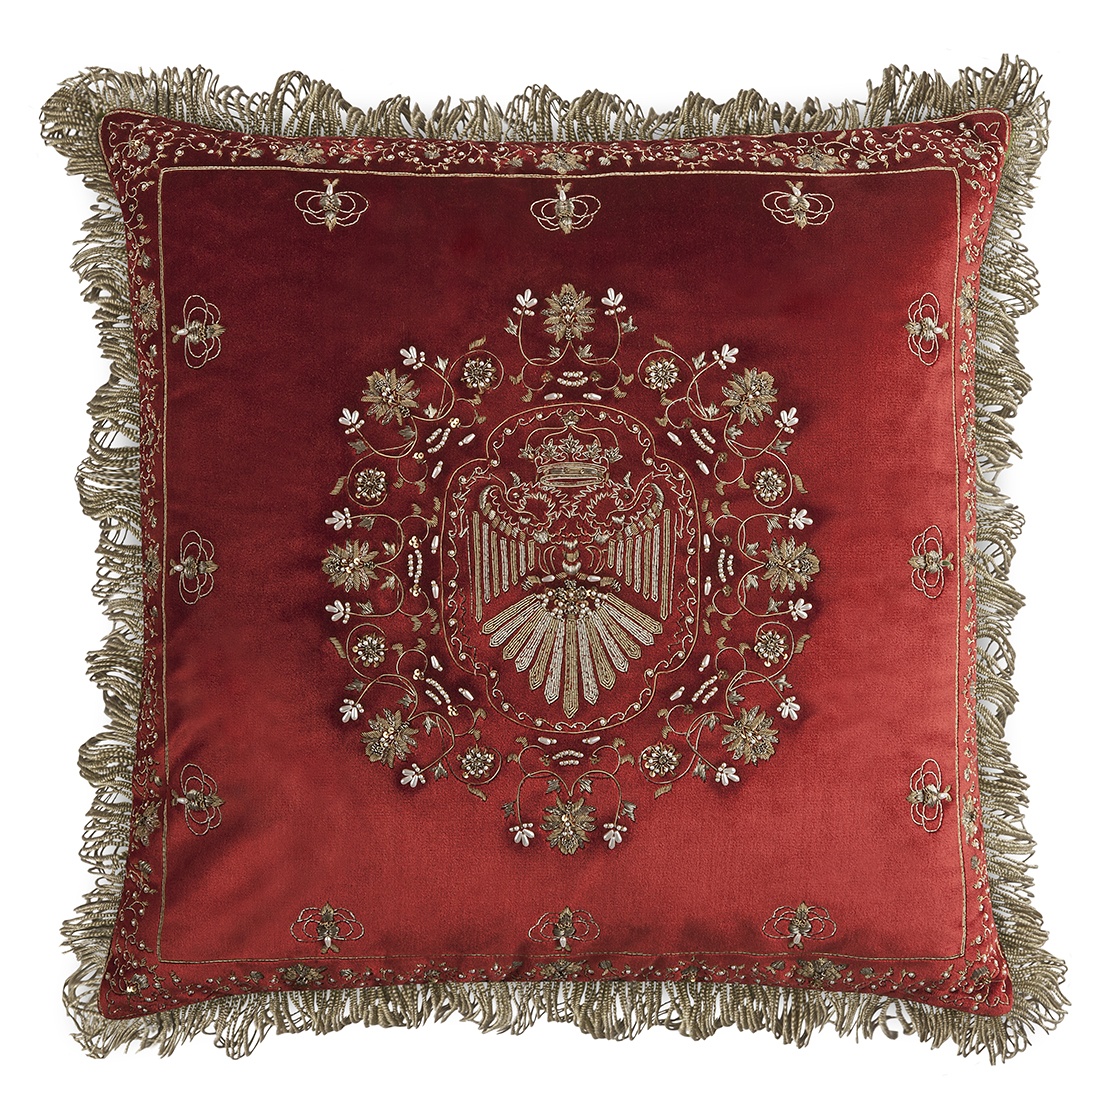 Beatrice cushion in Capri silk velvet - Toledo red - Beaumont & Fletcher